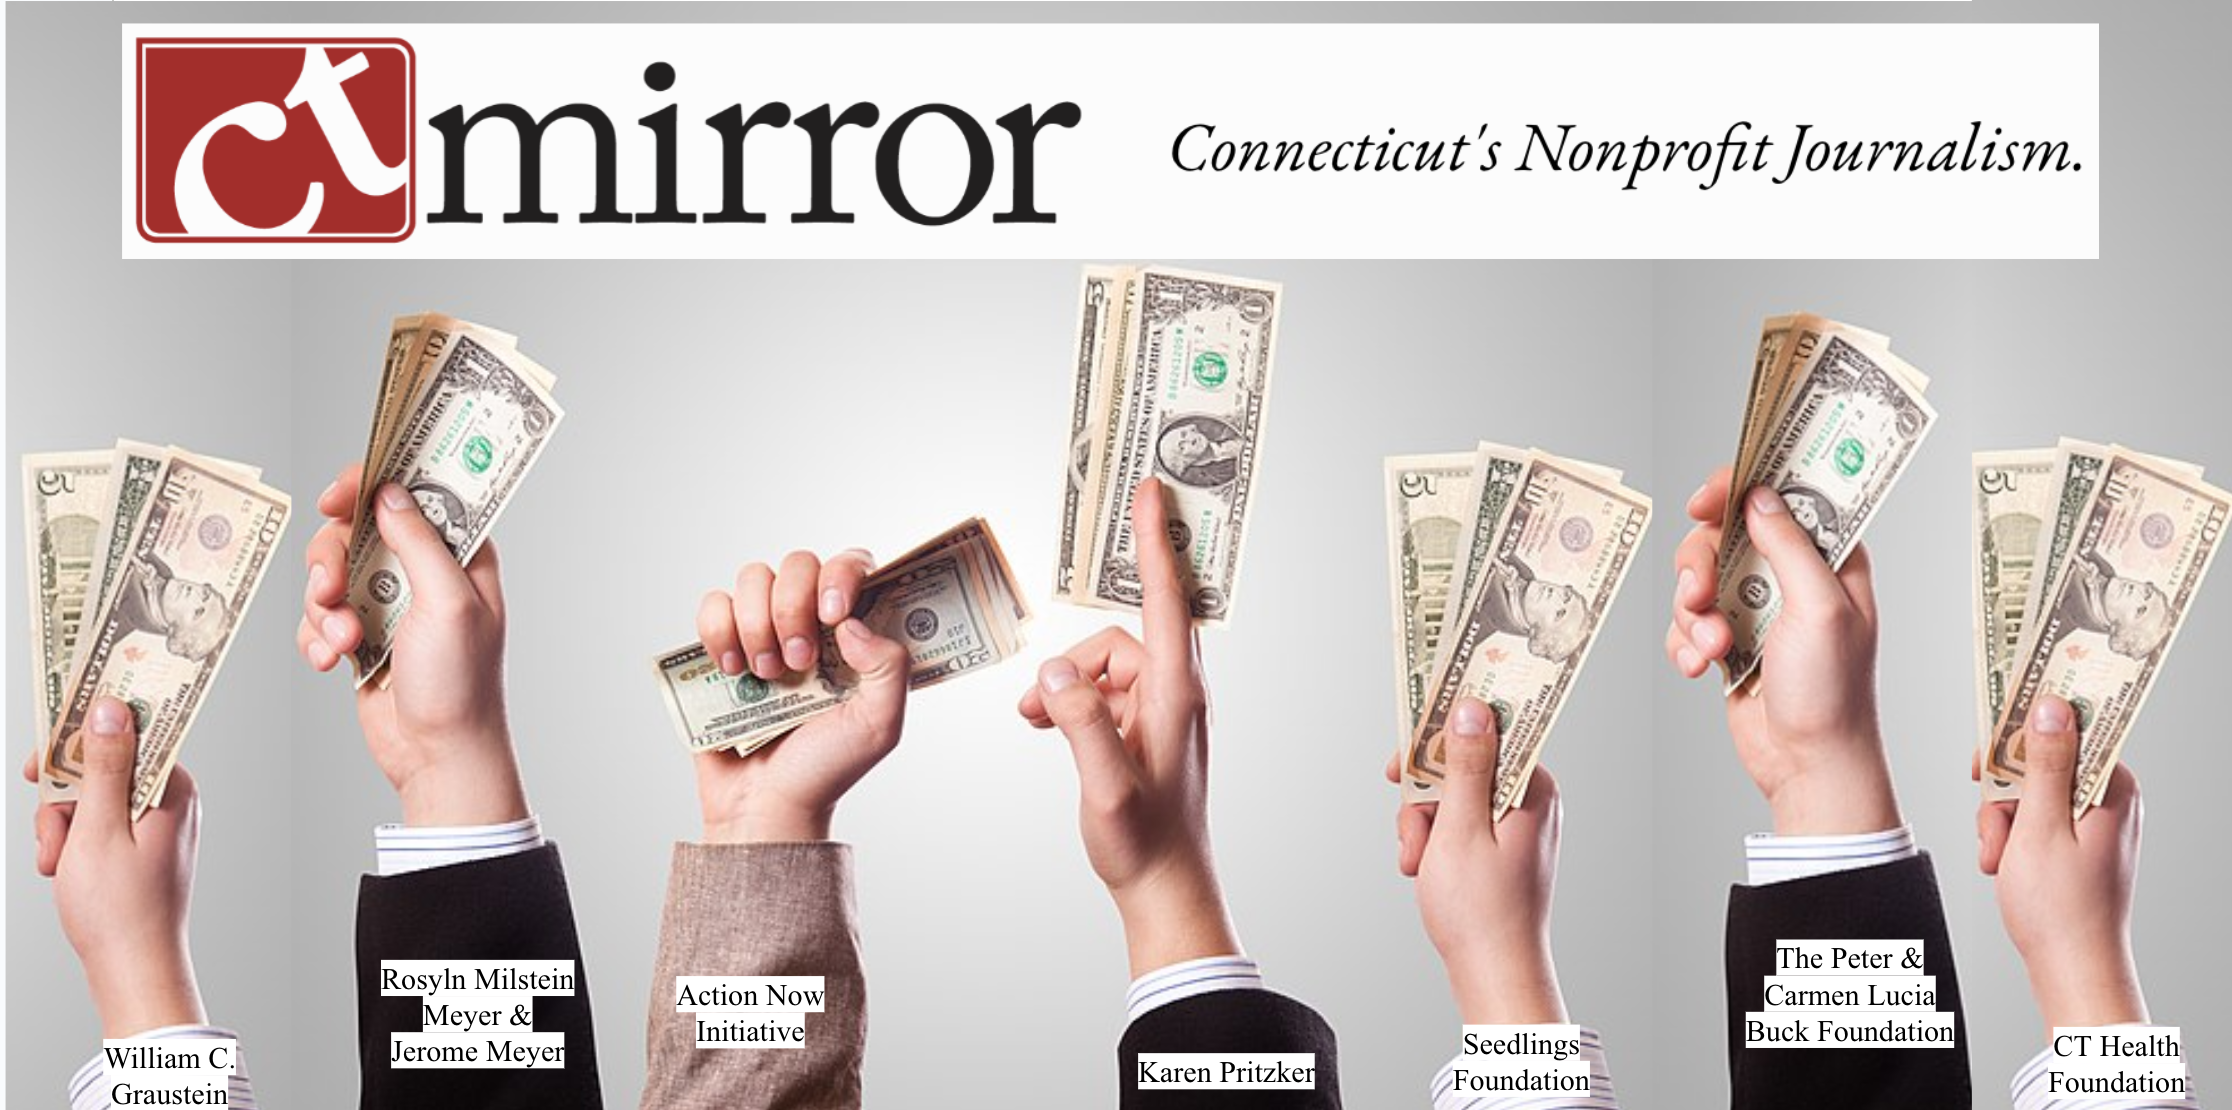 The Secret Funders Of CT Mirror – Partisan Billionaires, Corporate Titans And Leftist Activists (Part 1)